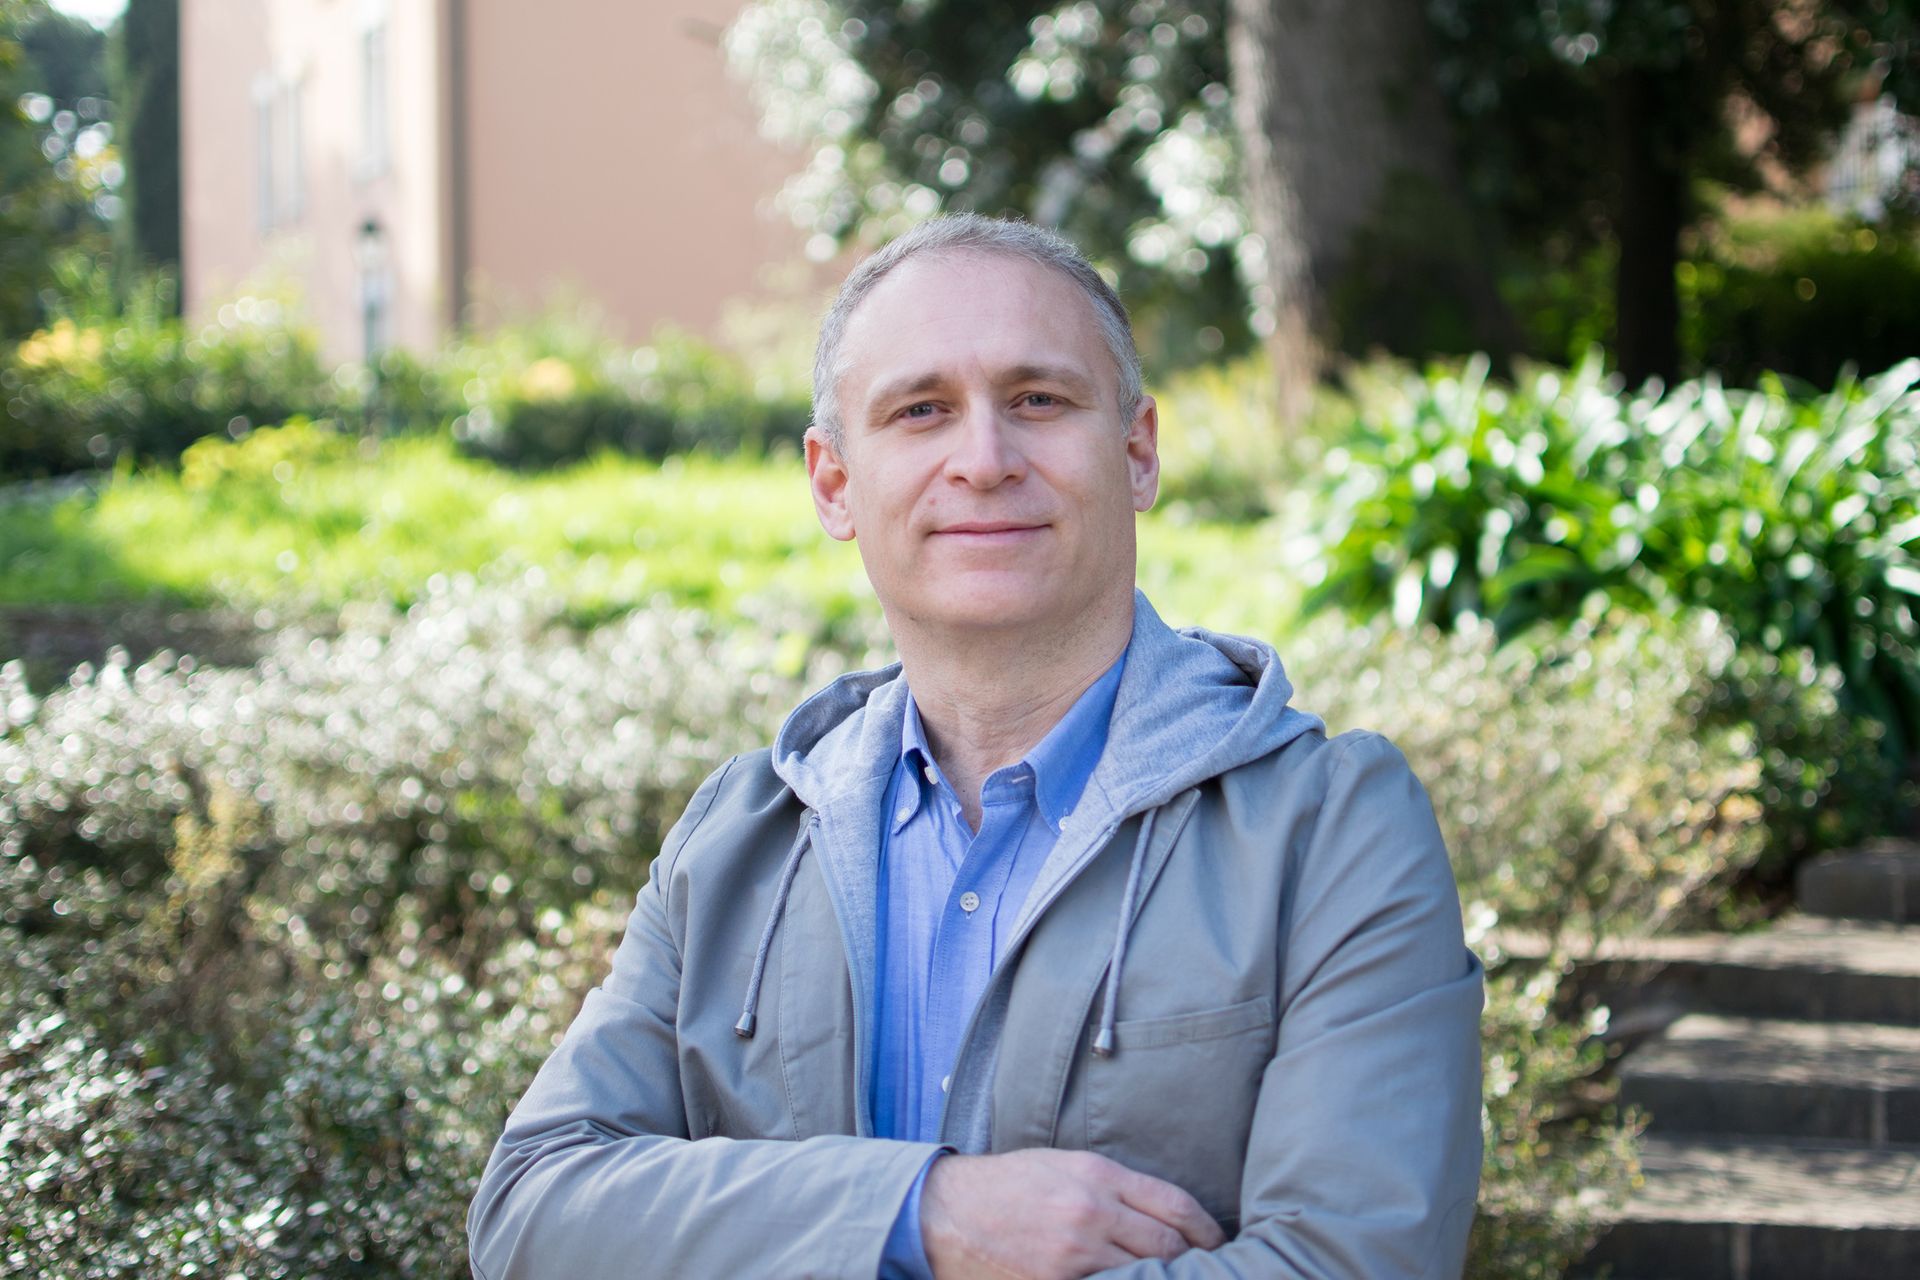 Fabio Fracas és responsable de les col·laboracions científiques a Transmutex